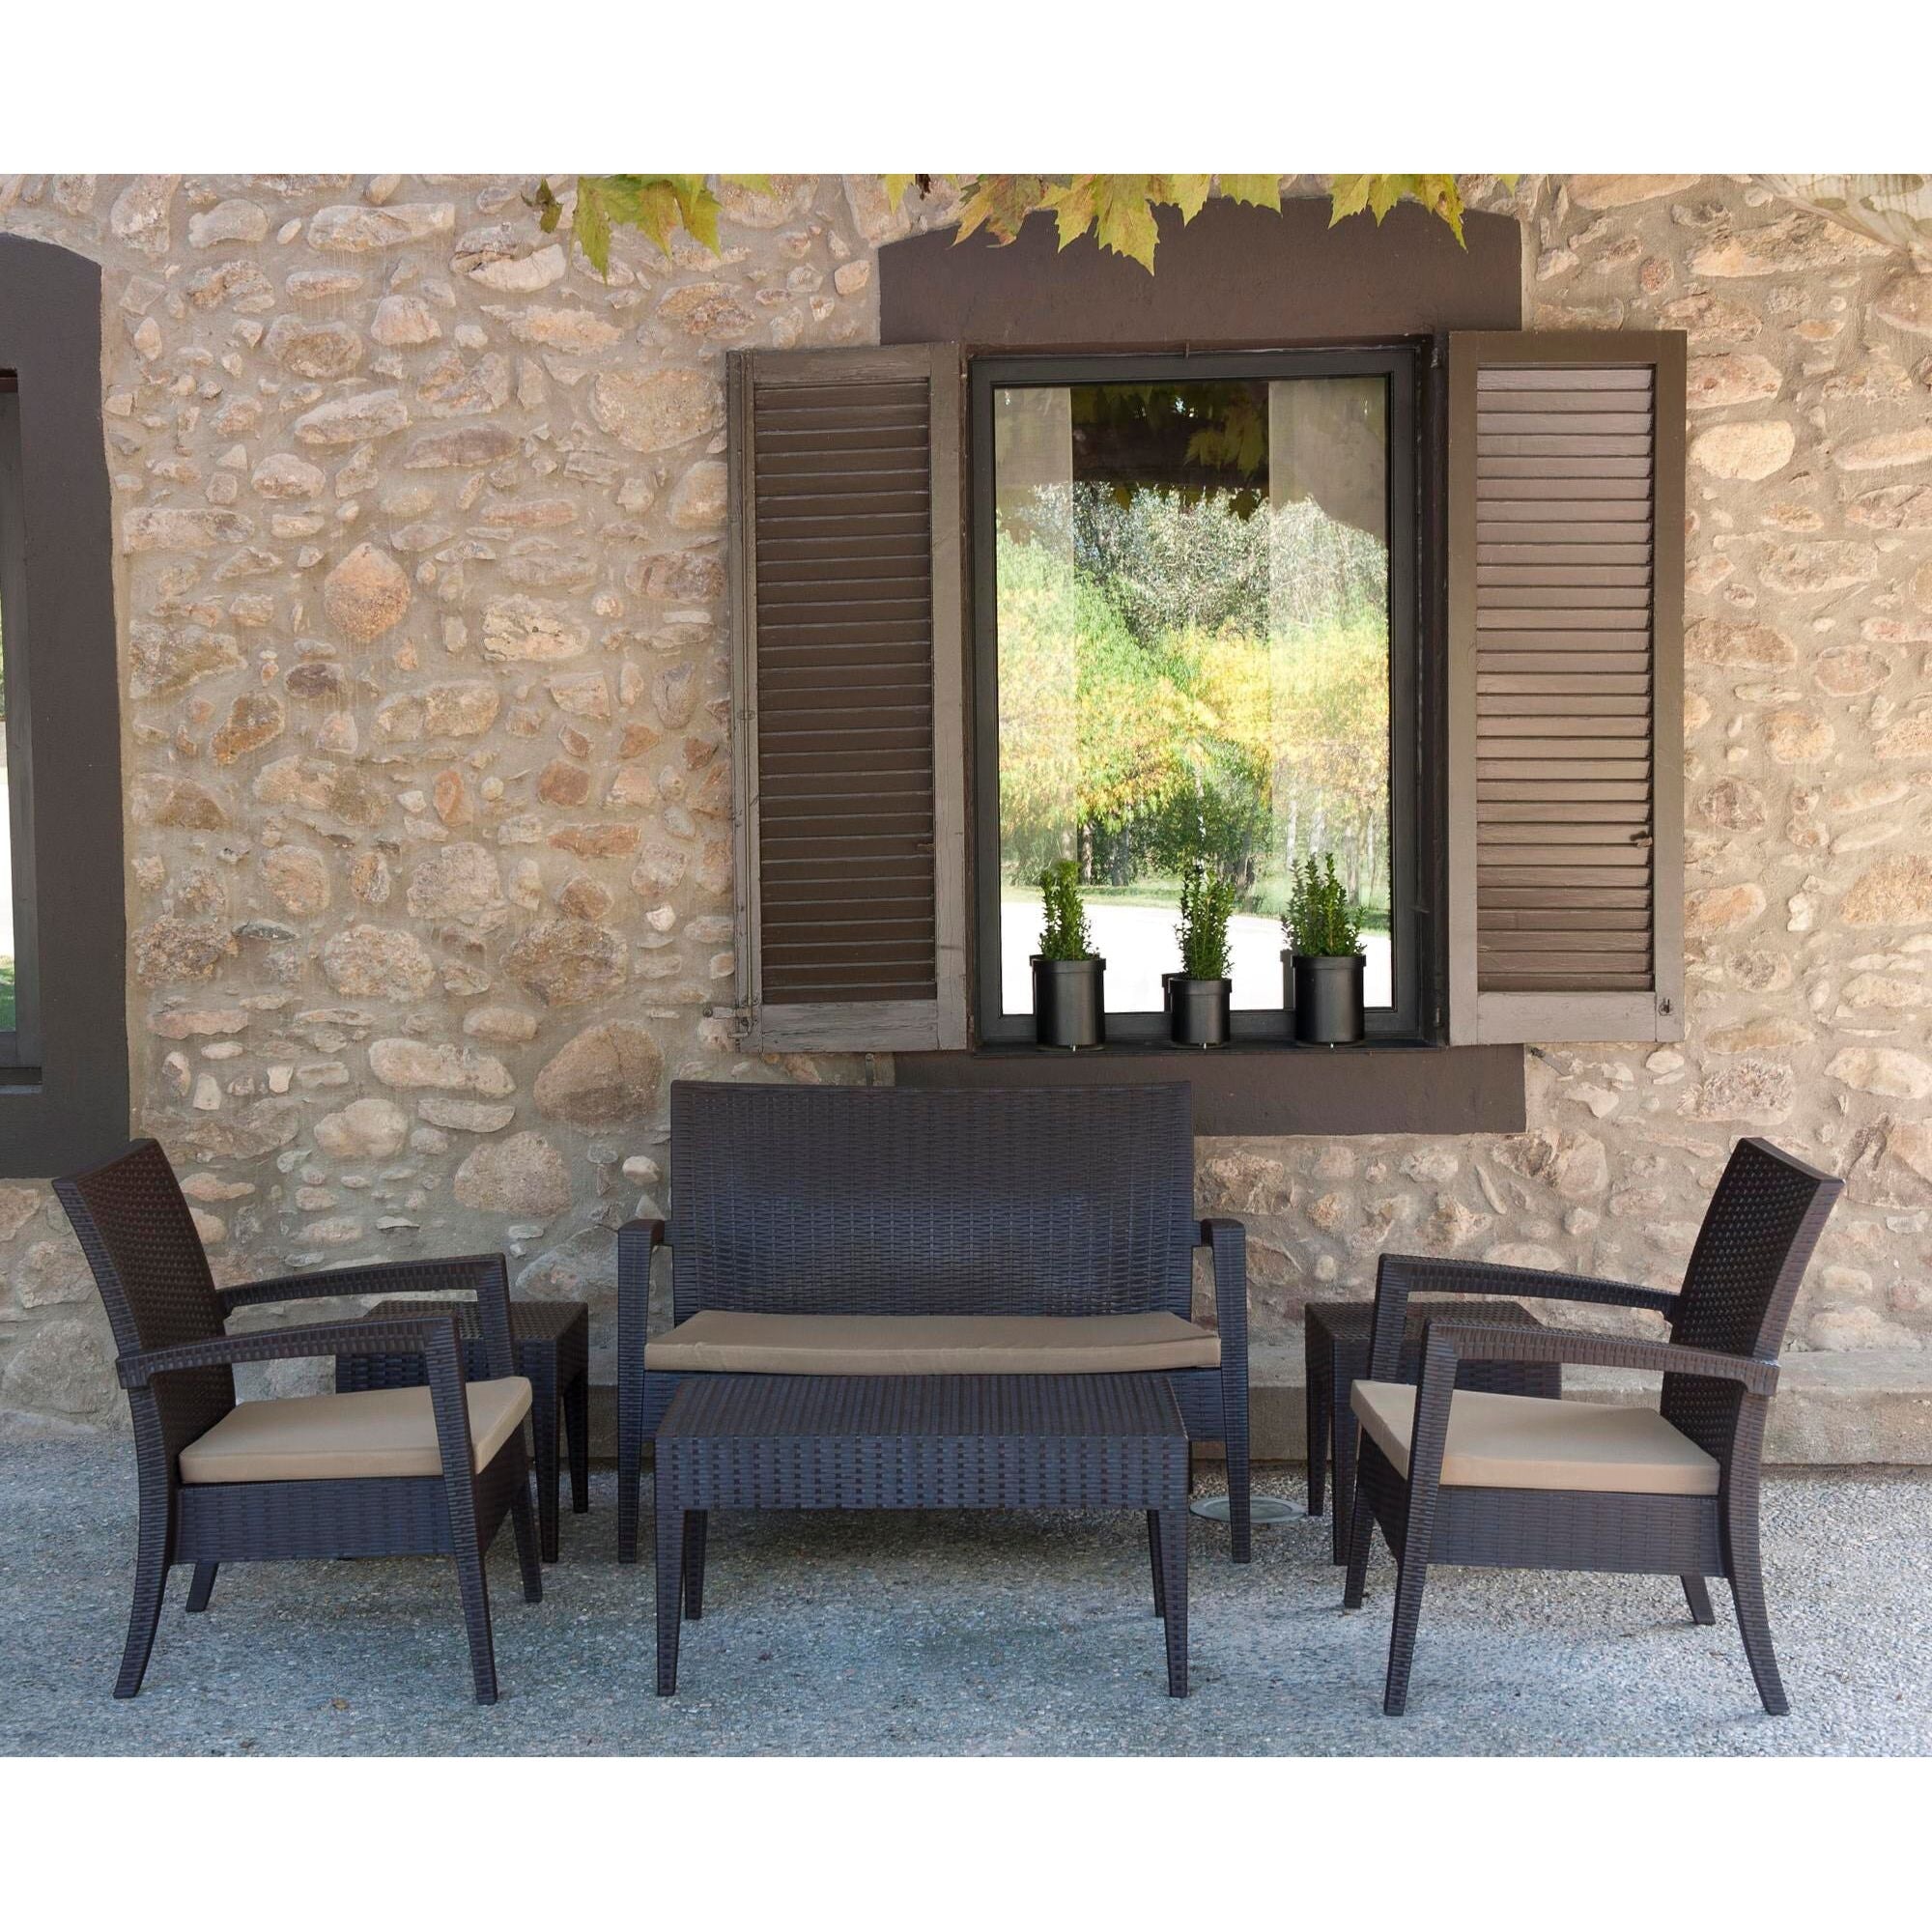 Garbar ipanema side table outdoor 45x45 white